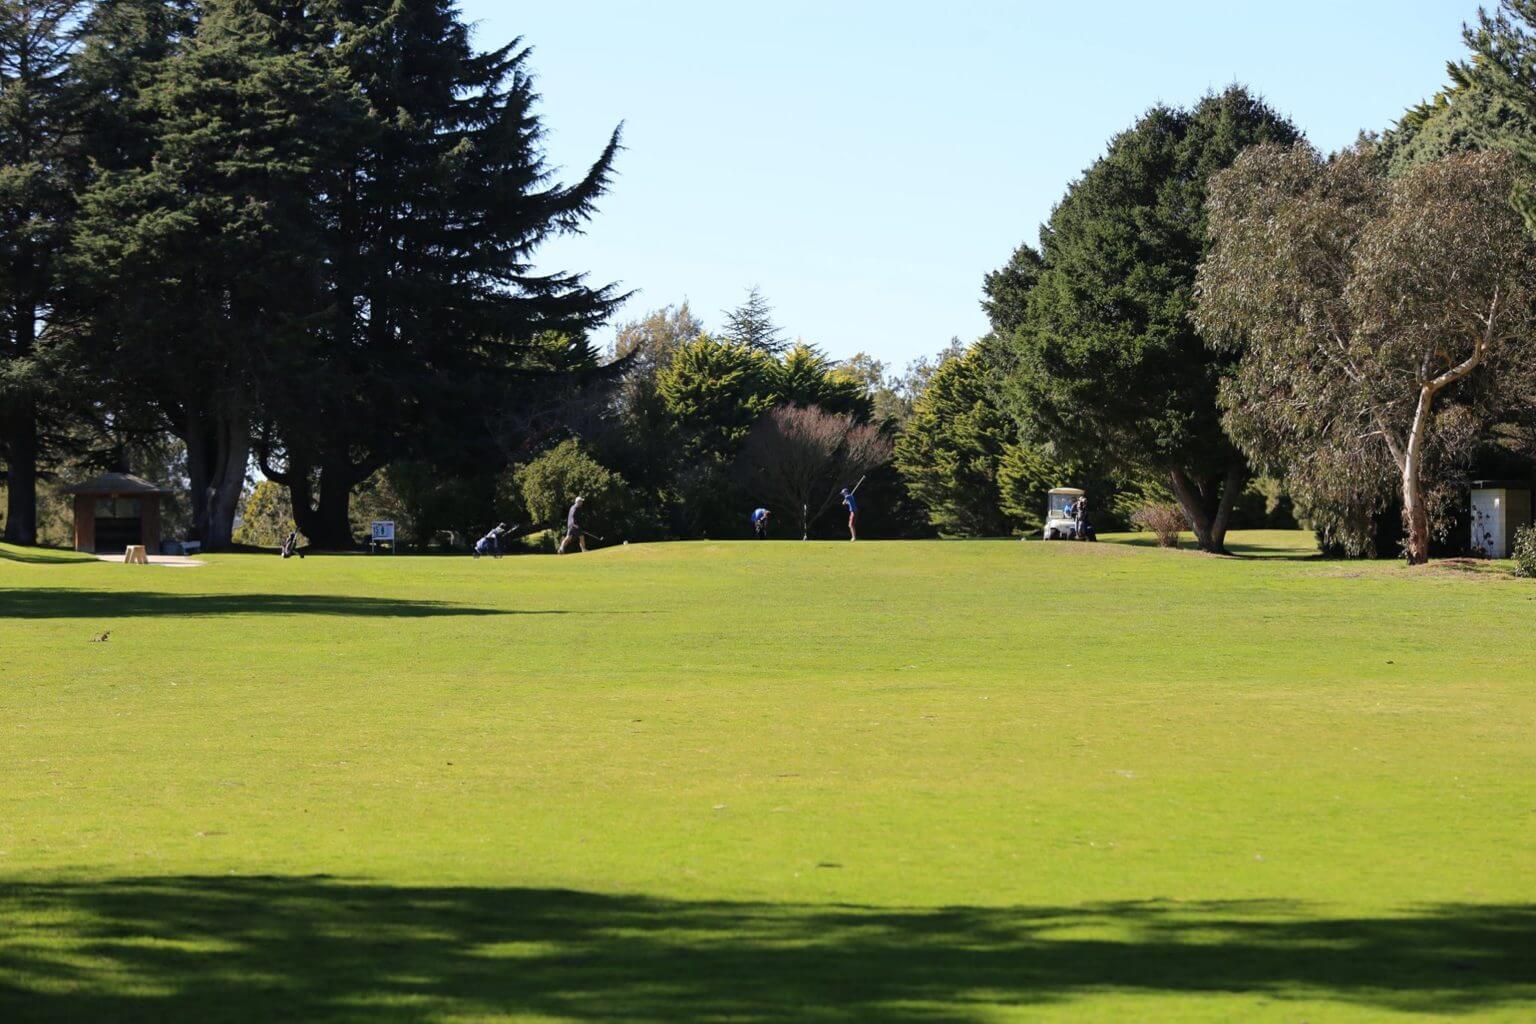 Trees surround golfer teeing off at Napier golf club